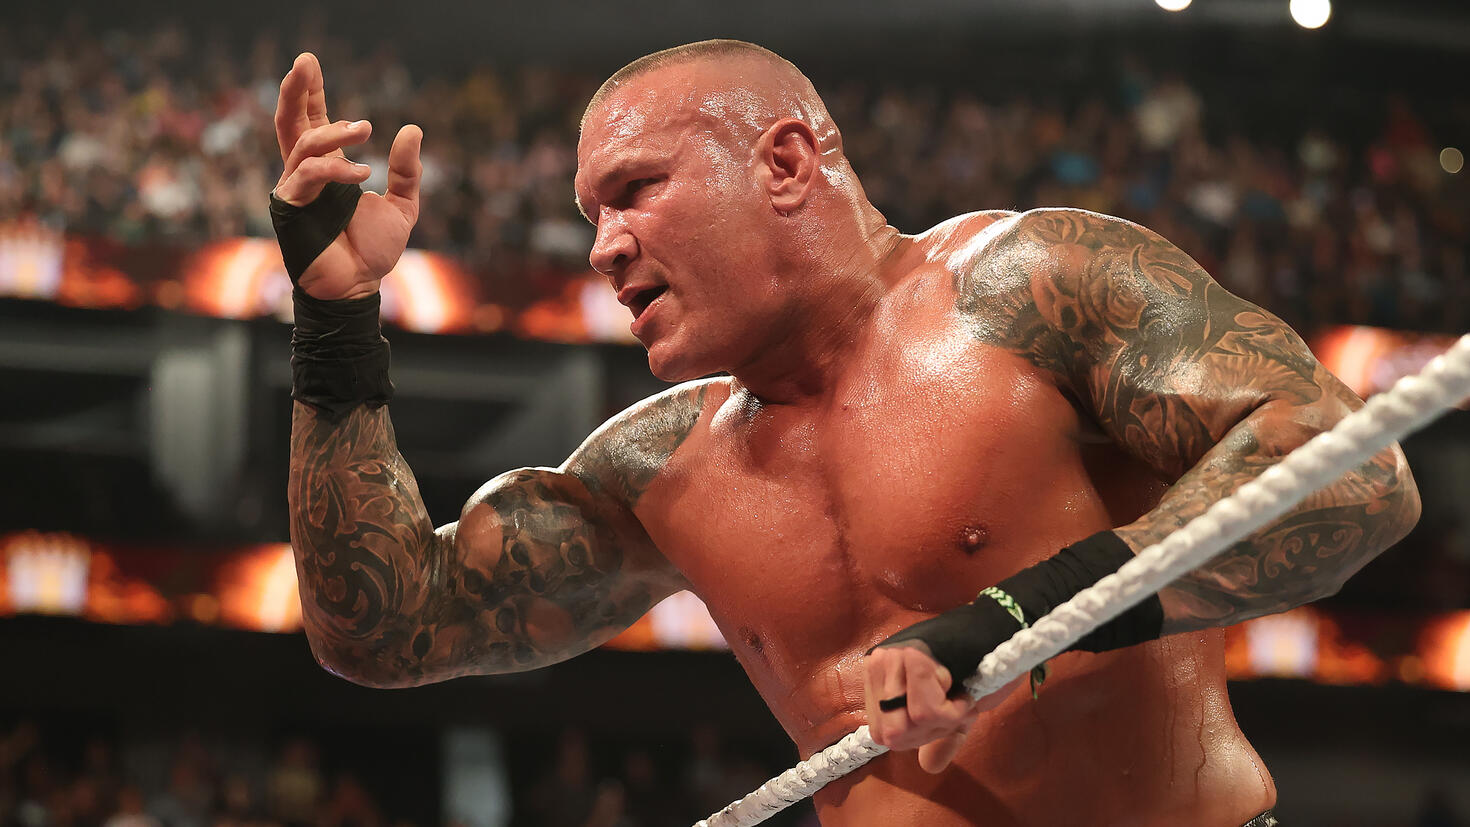 Vtipná reakce Randyho Ortona na špatný údaj o jeho váze při nástupu do ringu